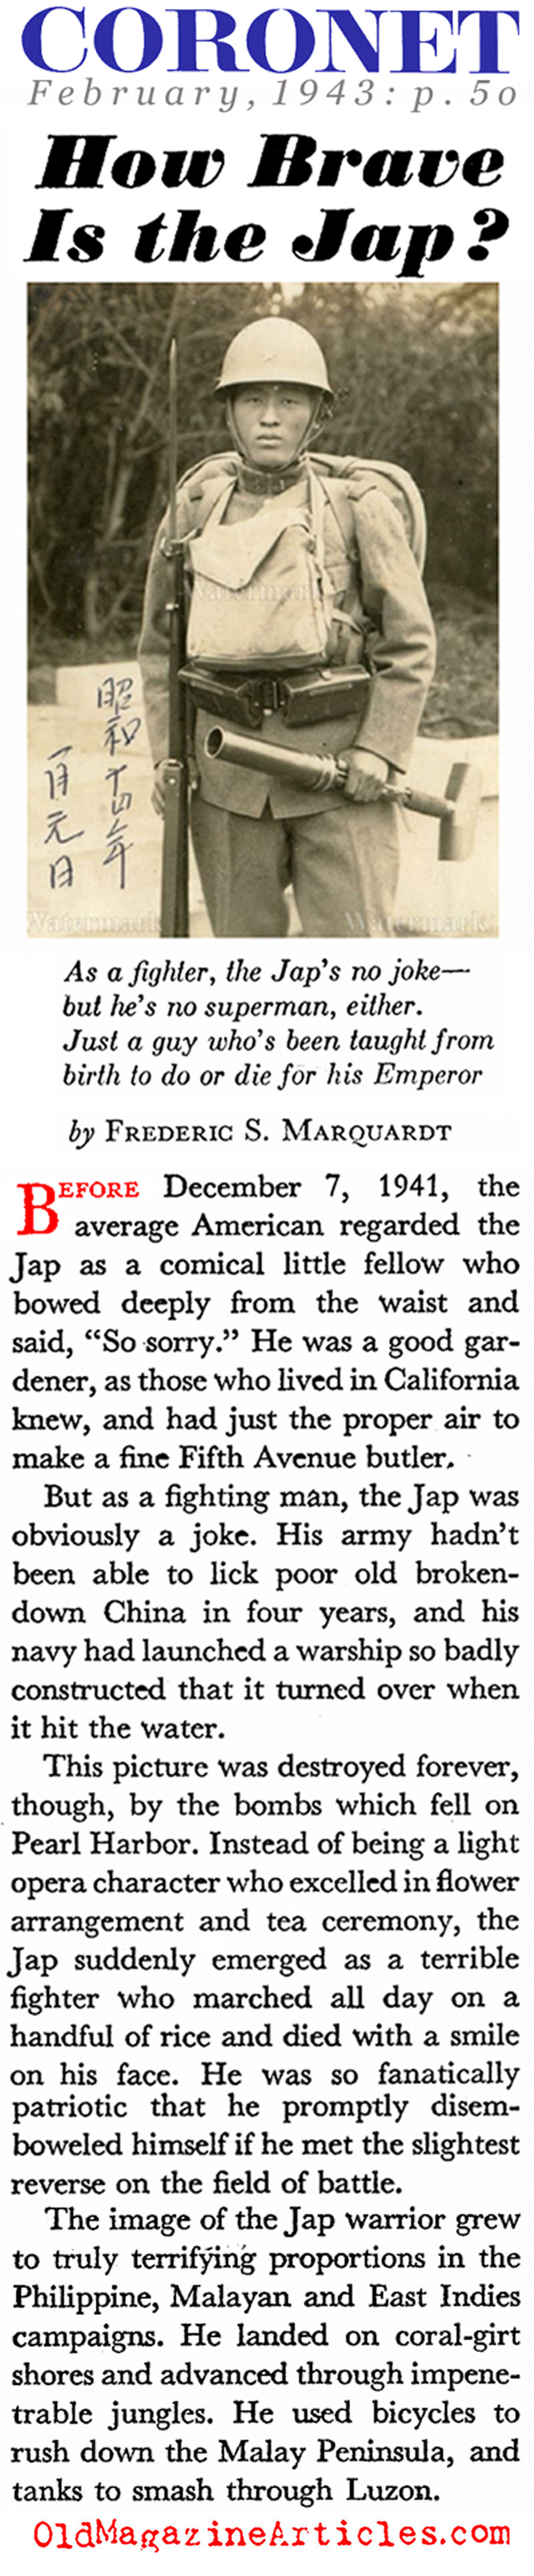 Was He Brave? (Coronet Magazine, 1943)